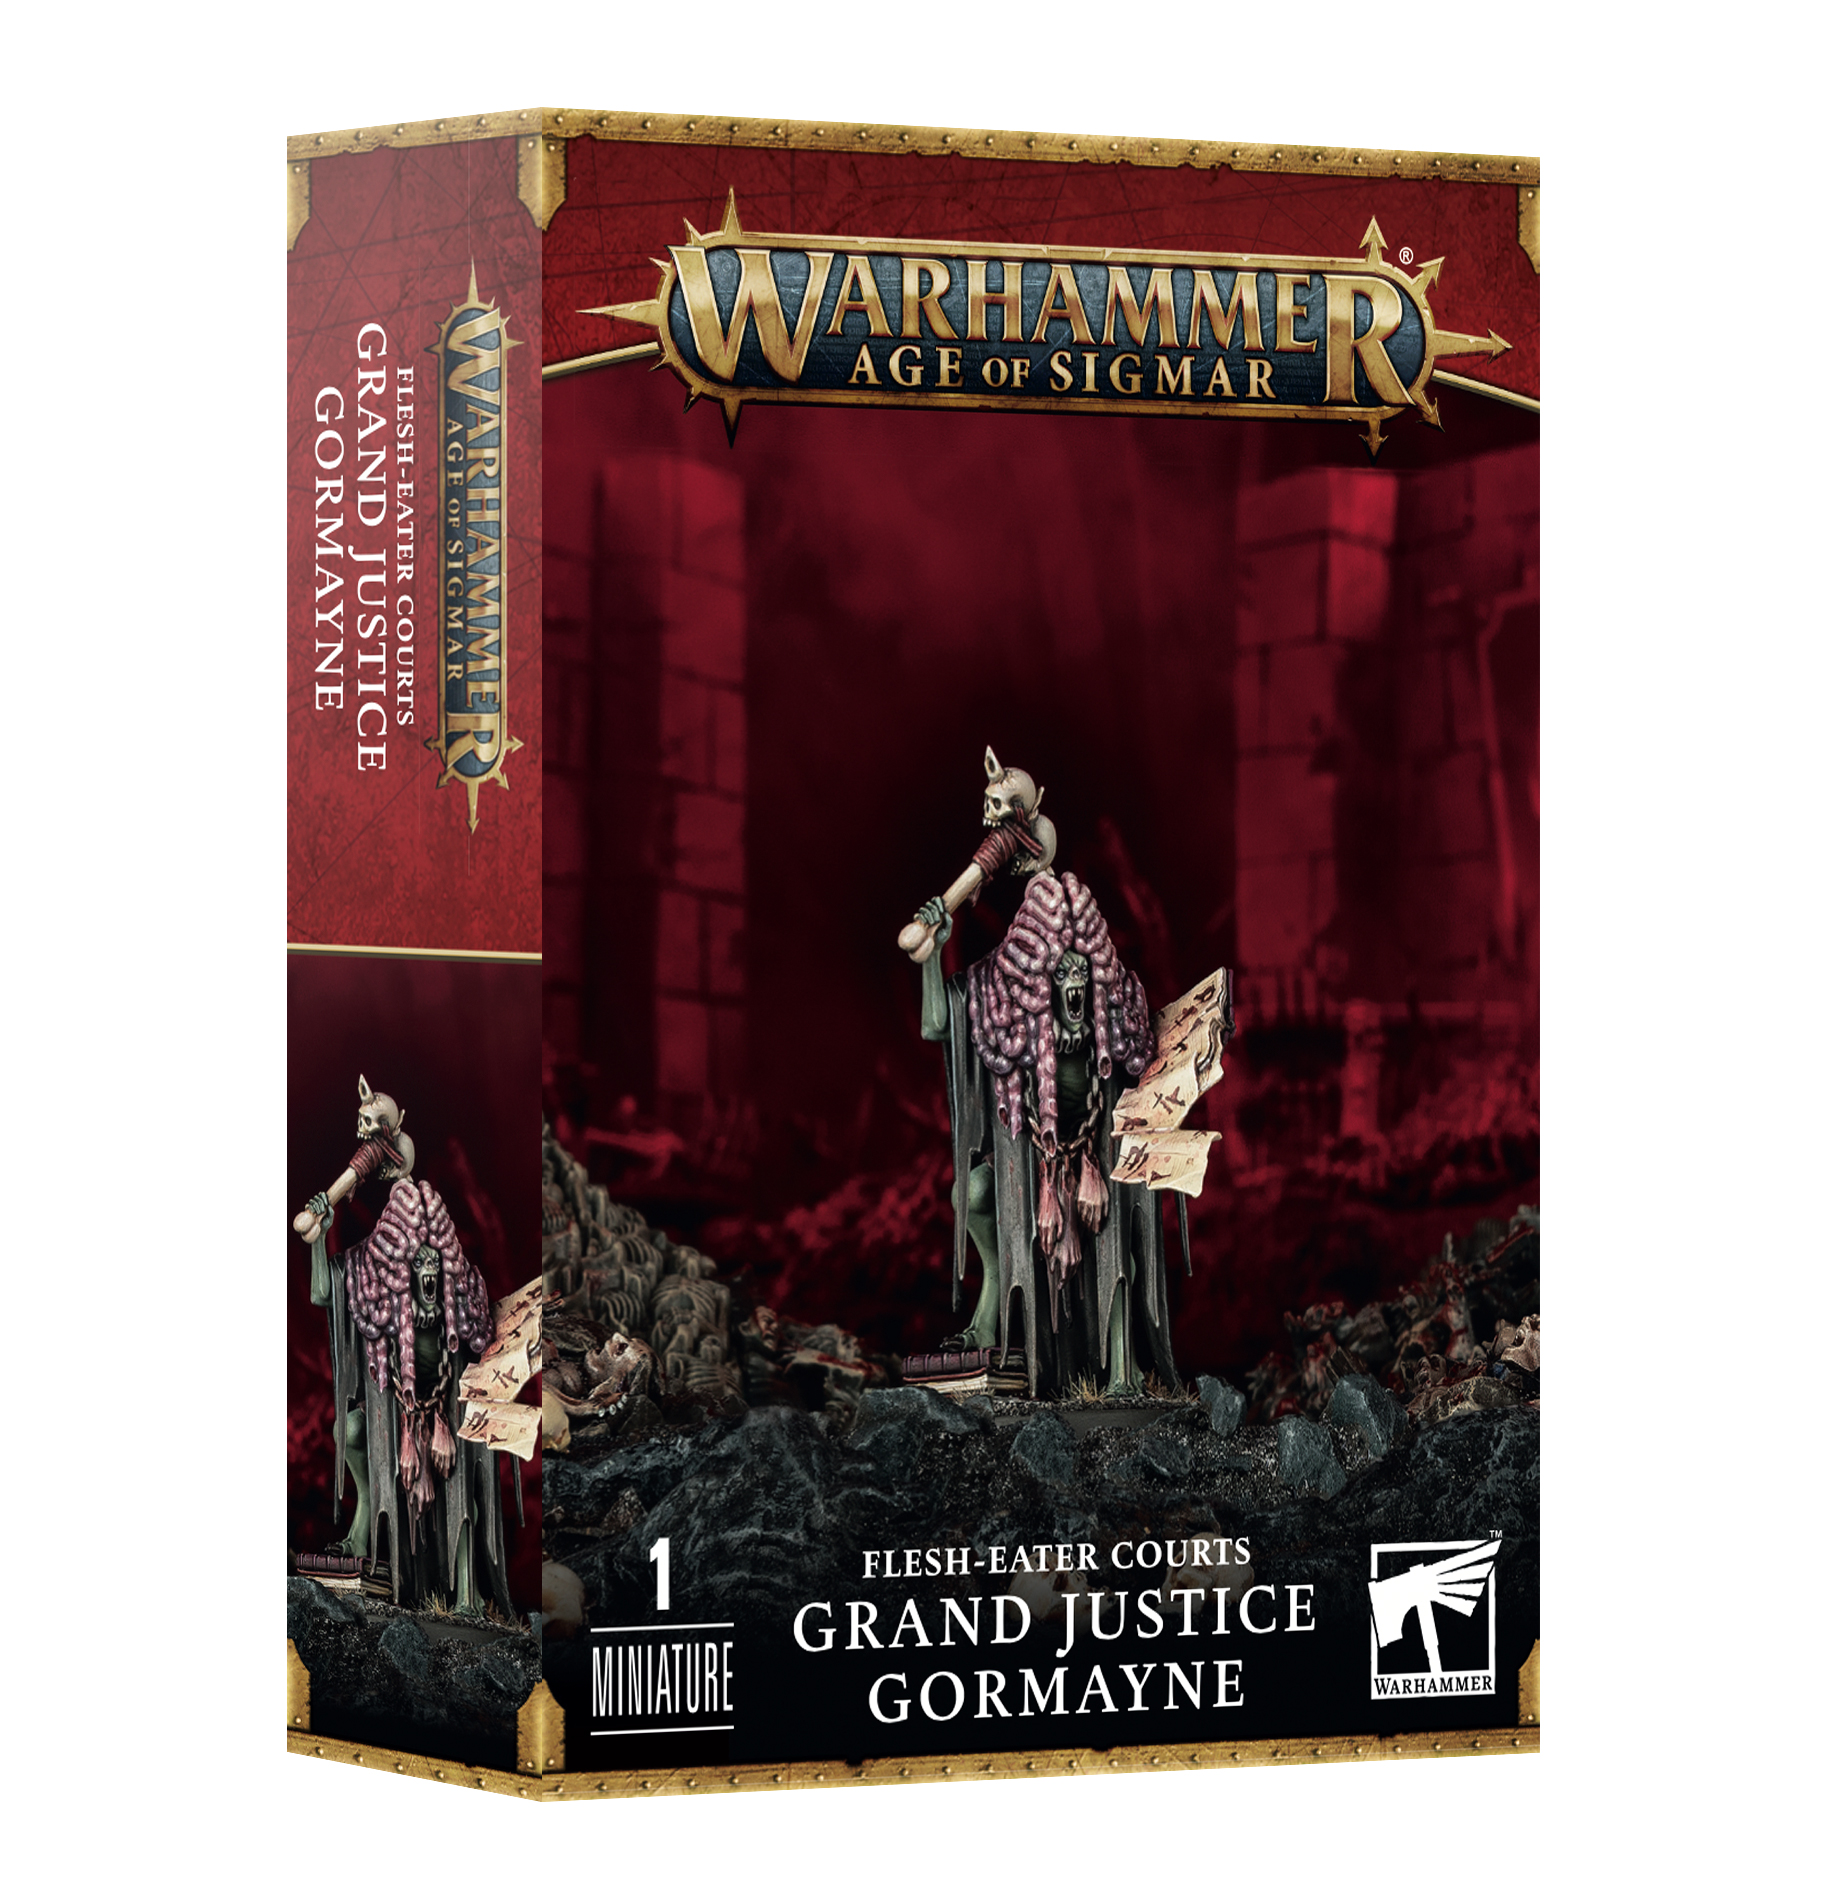 Grand Justice Gormayne - Flesh-eater Courts - 91-70 - Warhammer Age of Sigmar